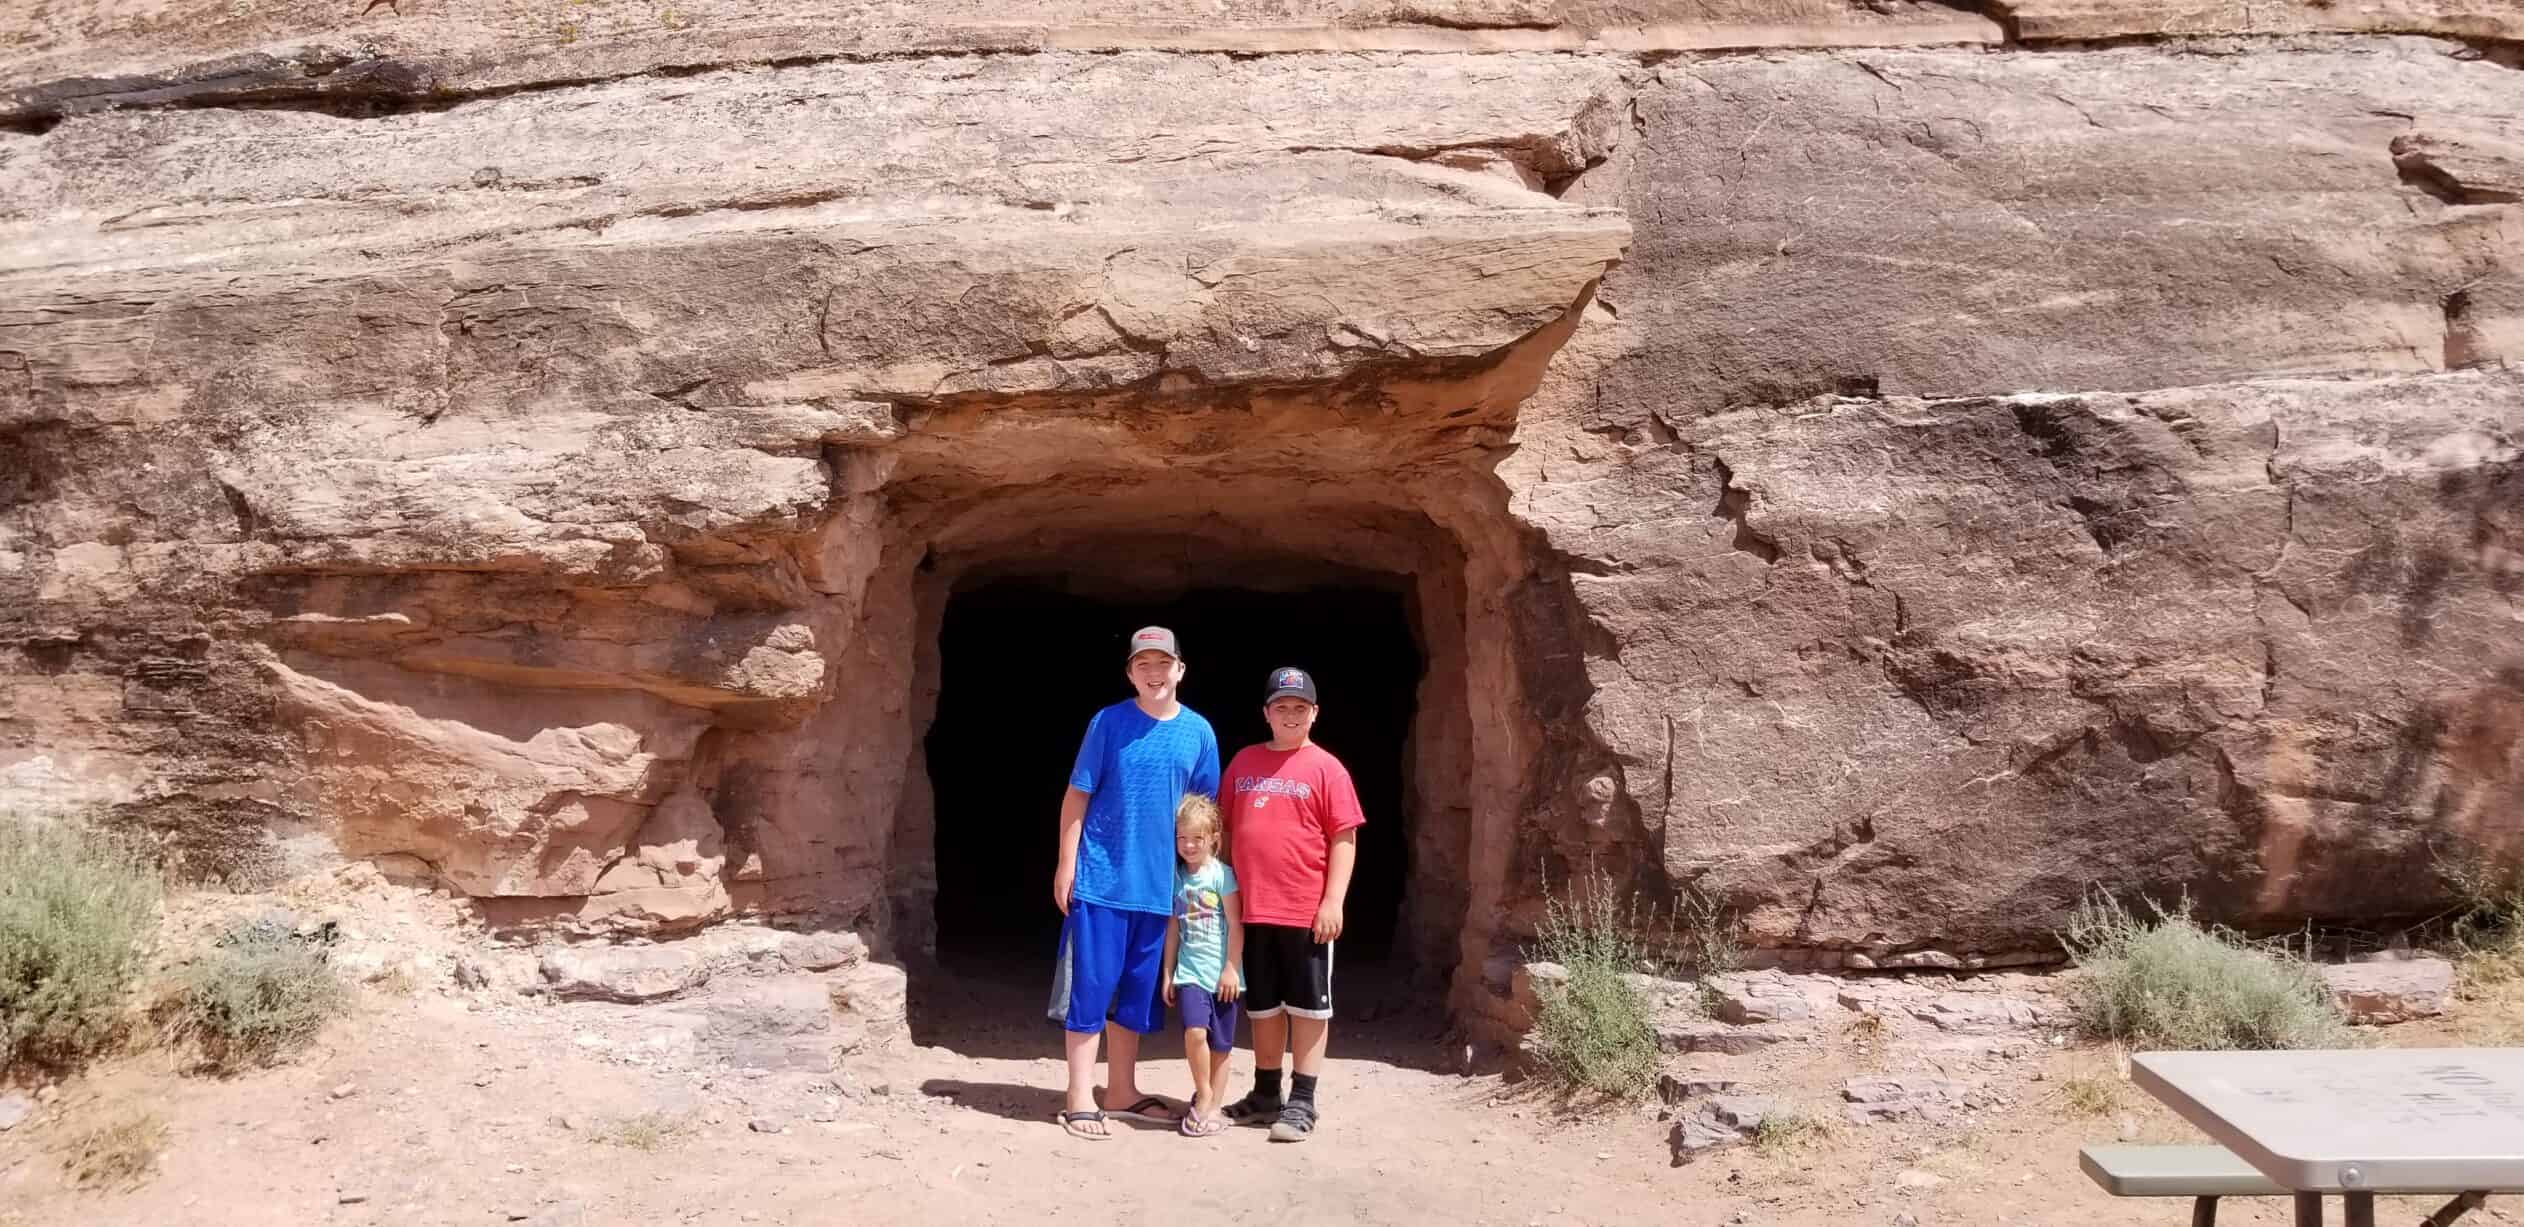 kids in front of cave in Moab Utah